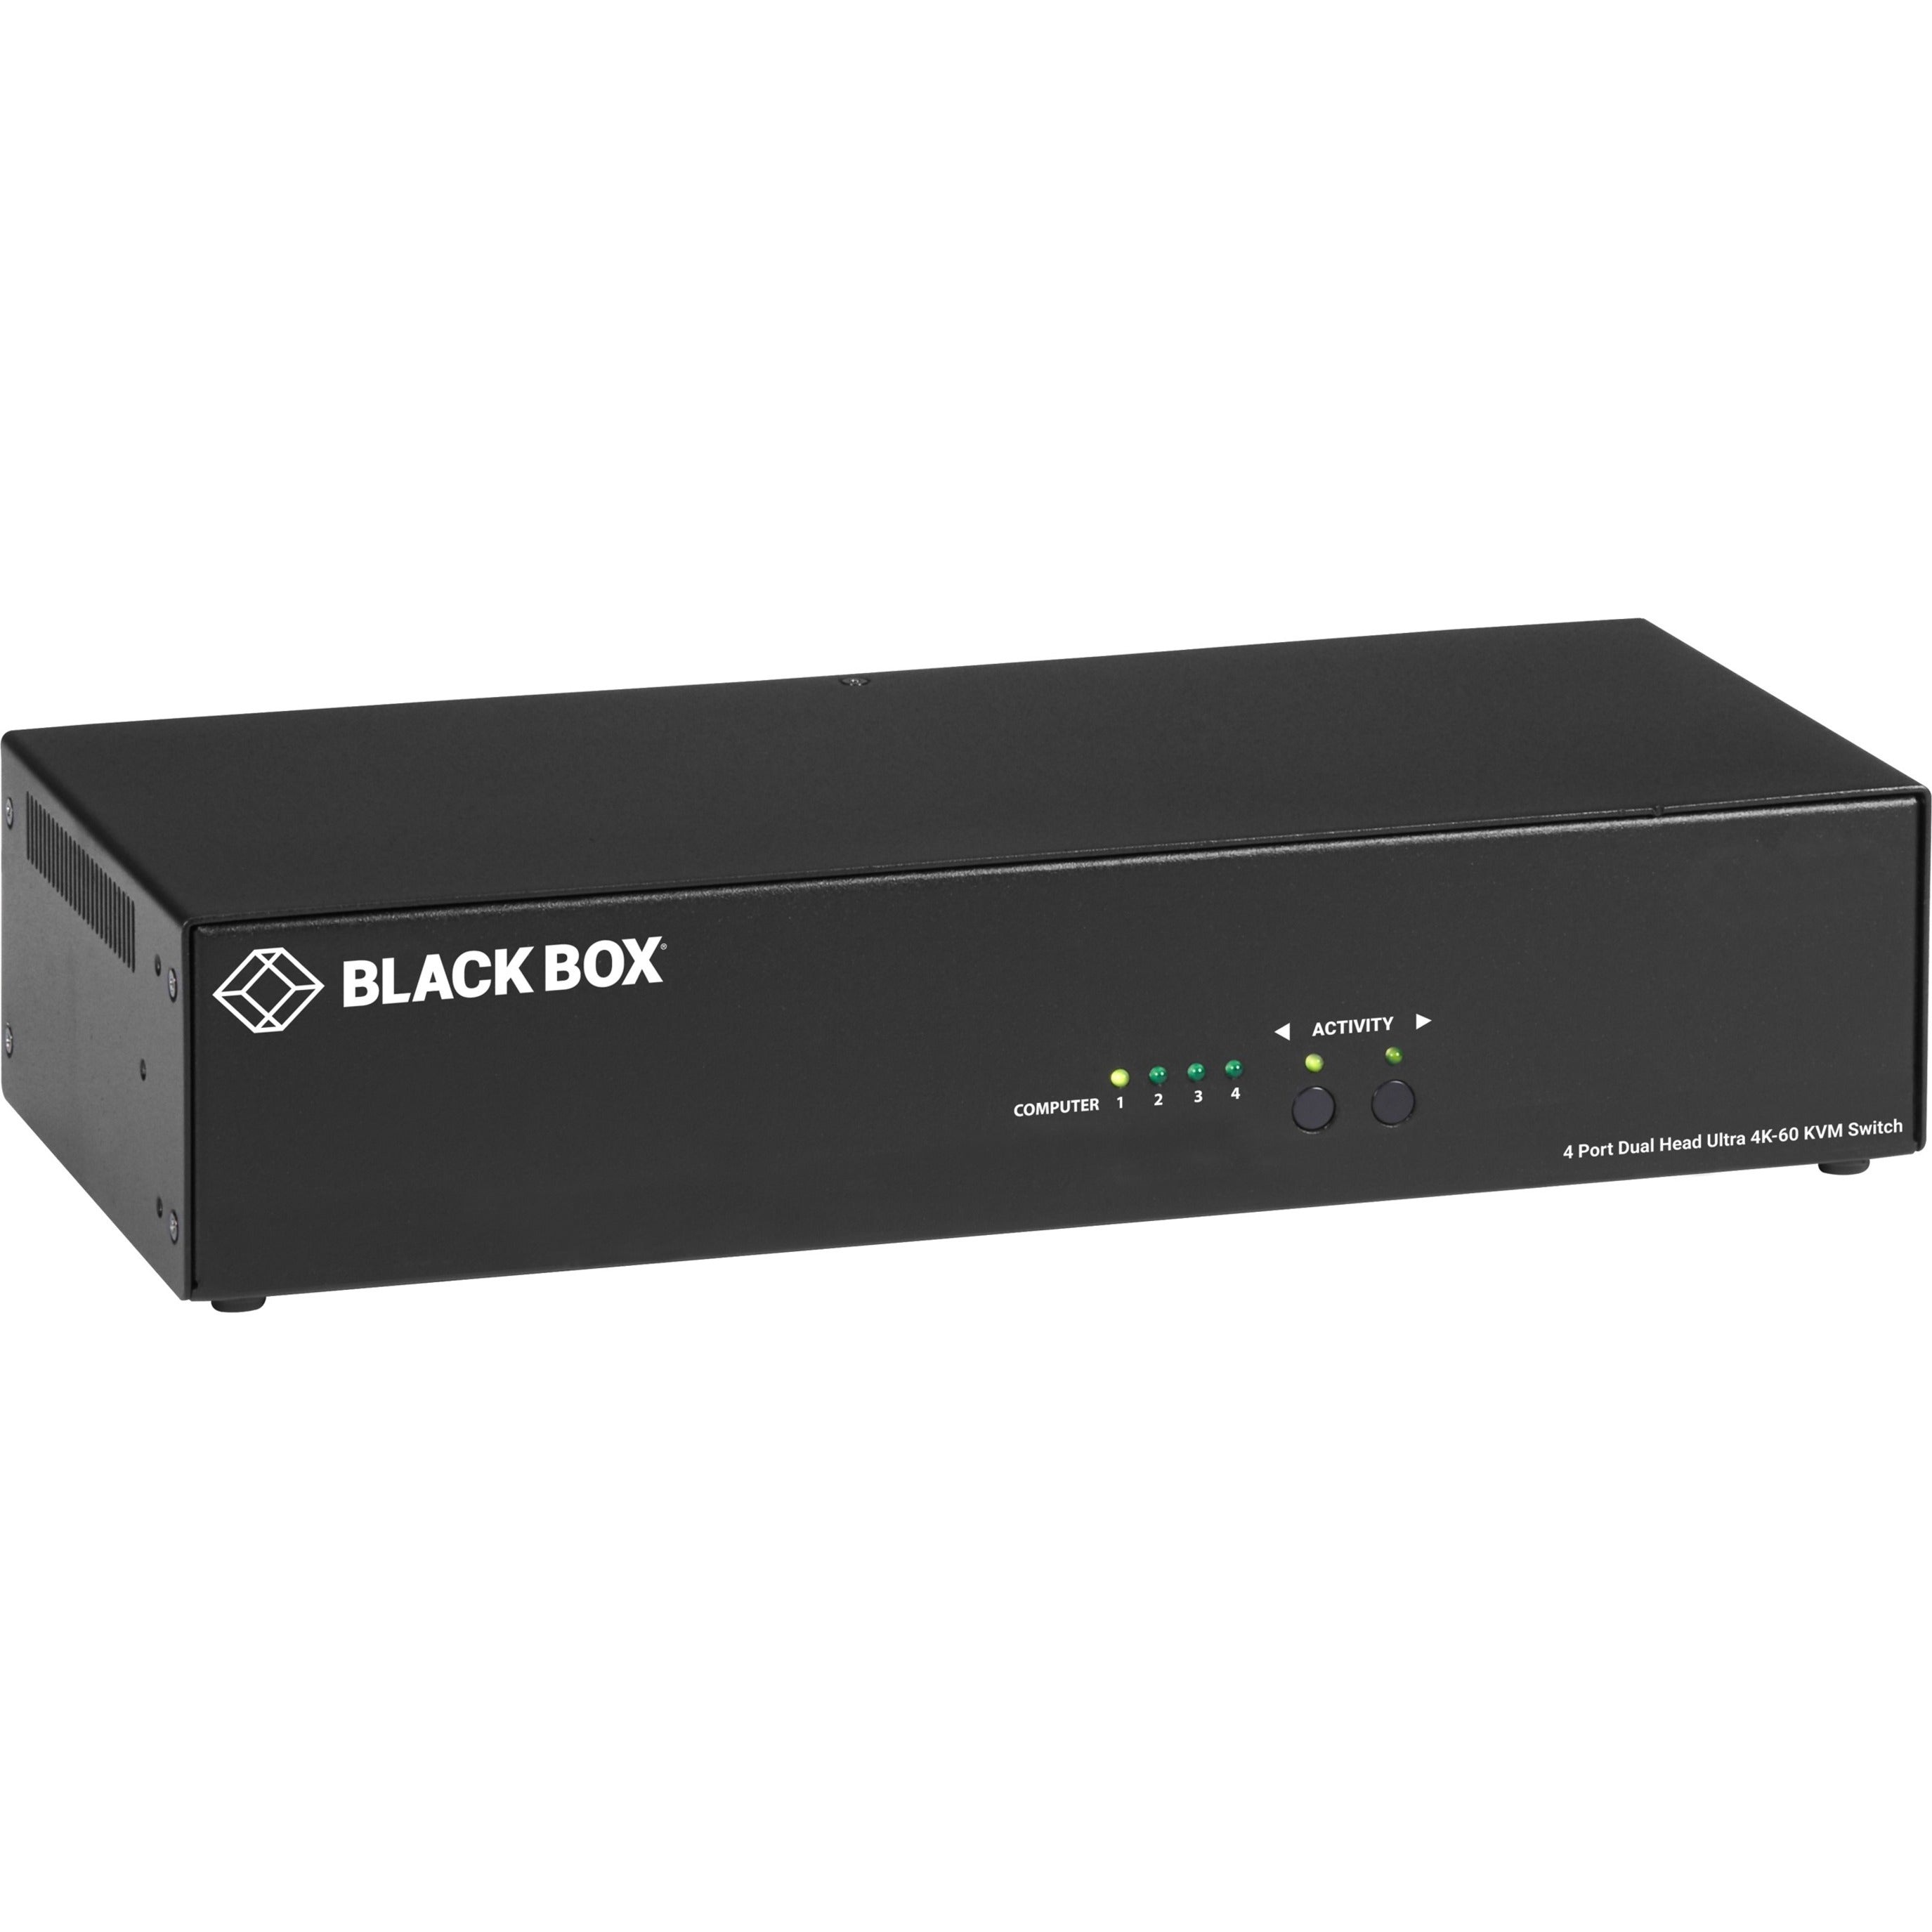 Black Box HD6224A 4K60 HDMI Dual-Head KVM Switch - 4 Port, Maximum Video Resolution 3840 x 2160, 2 Year Warranty